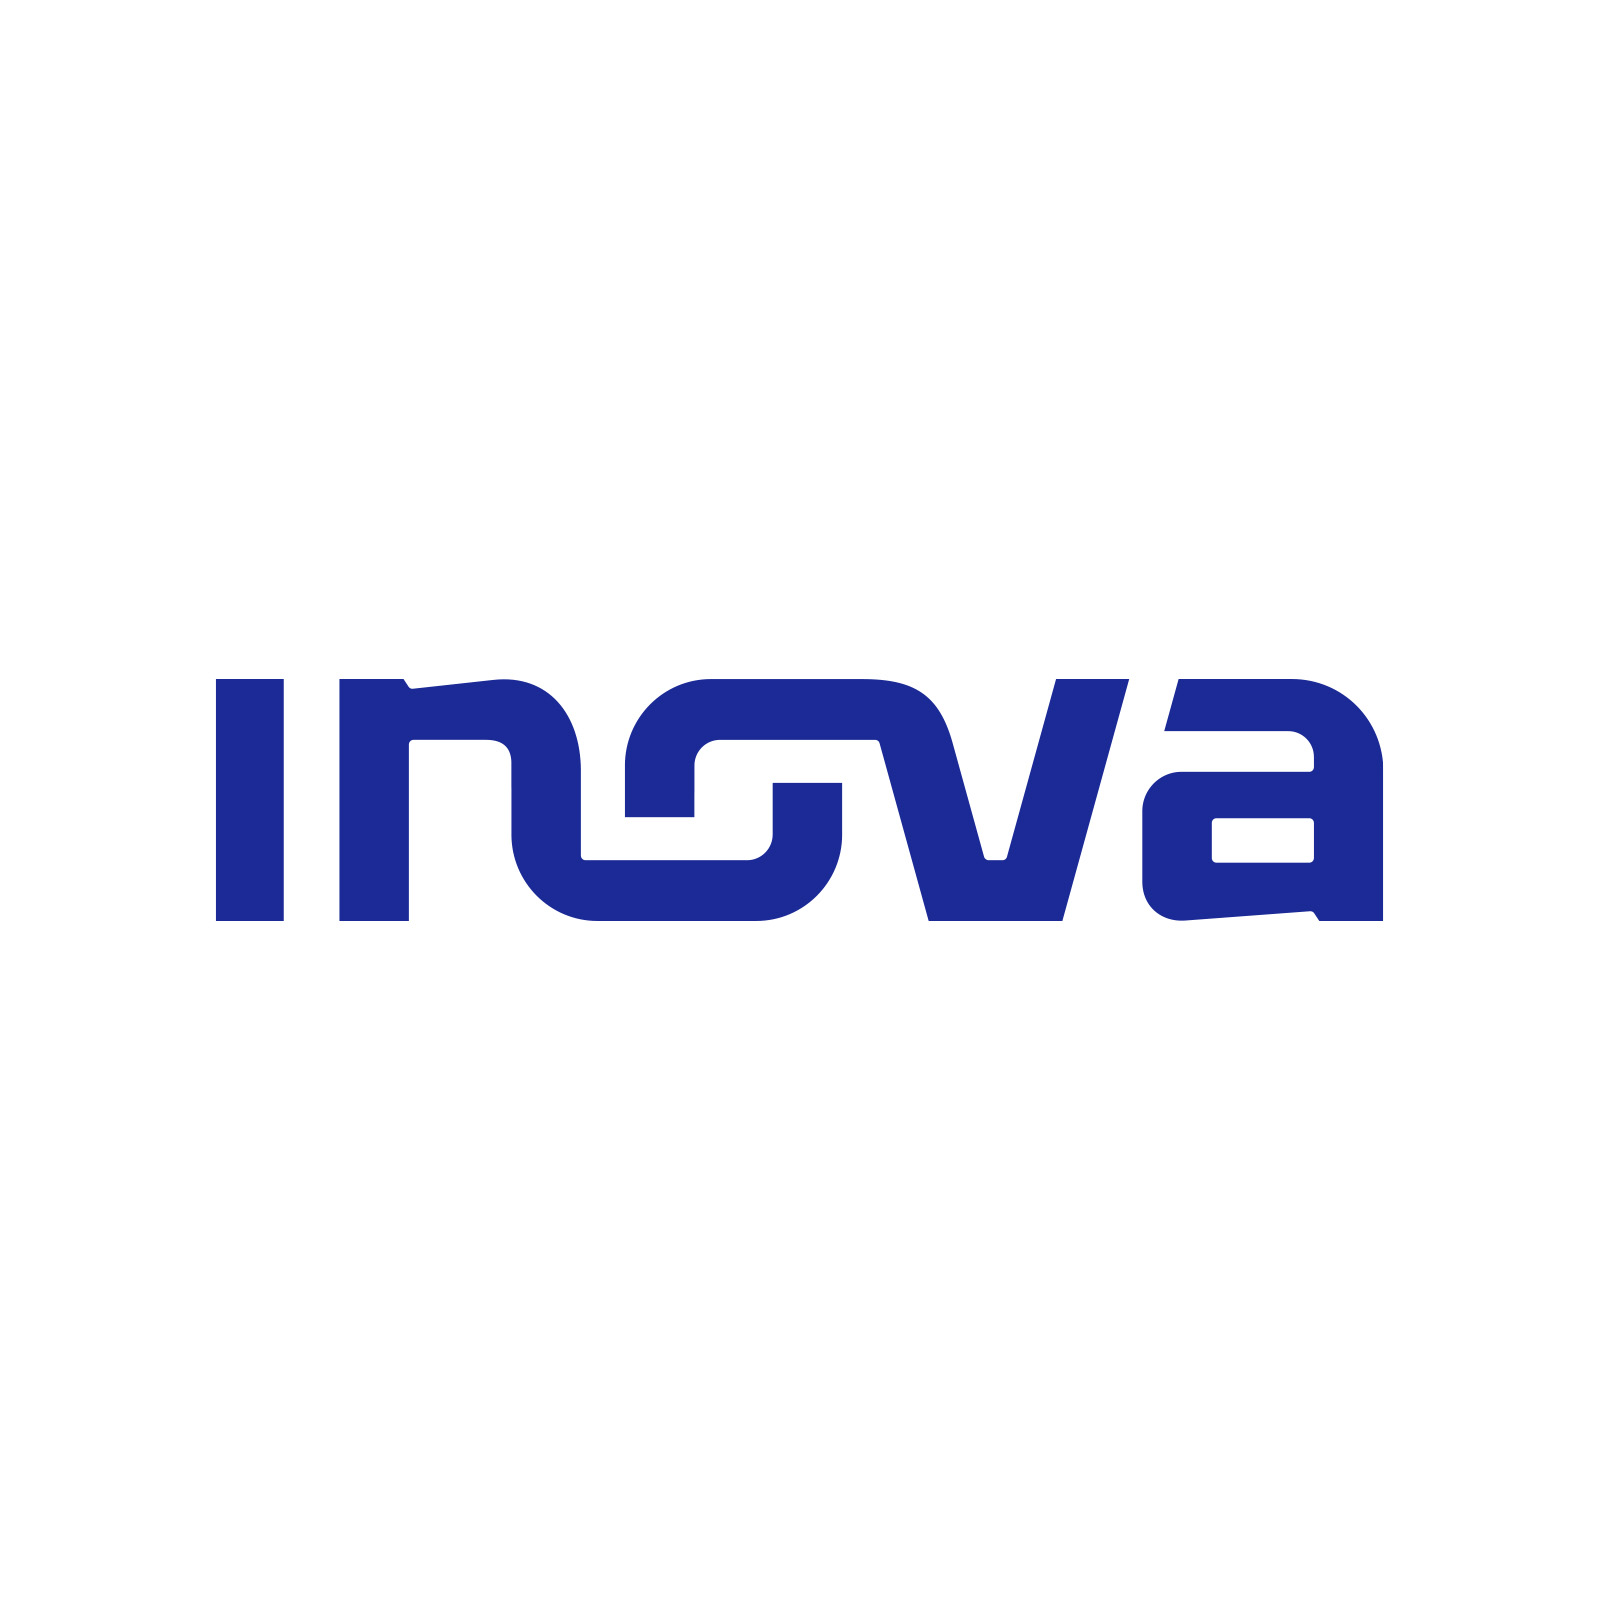 Inova logo design by logo designer Stanislav+Regis for your inspiration and for the worlds largest logo competition